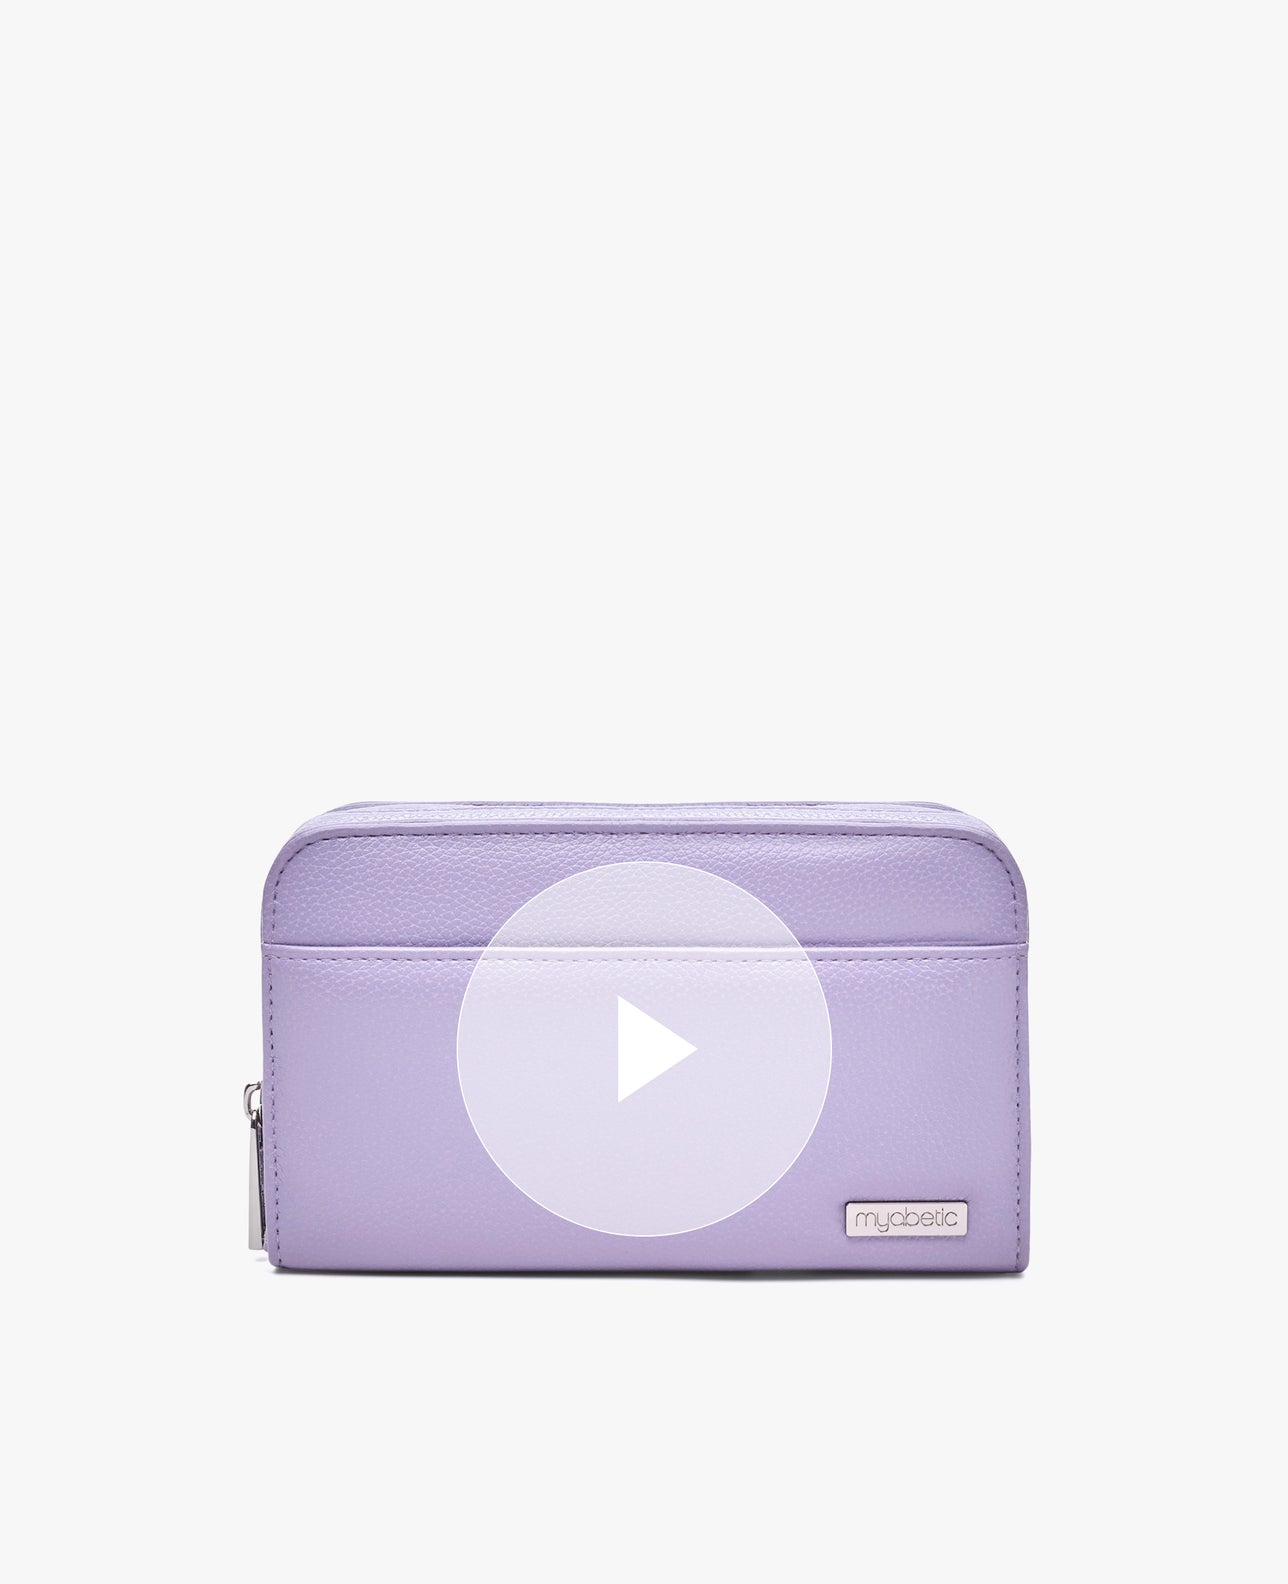 Color:Lavender  https://player.vimeo.com/video/523970398